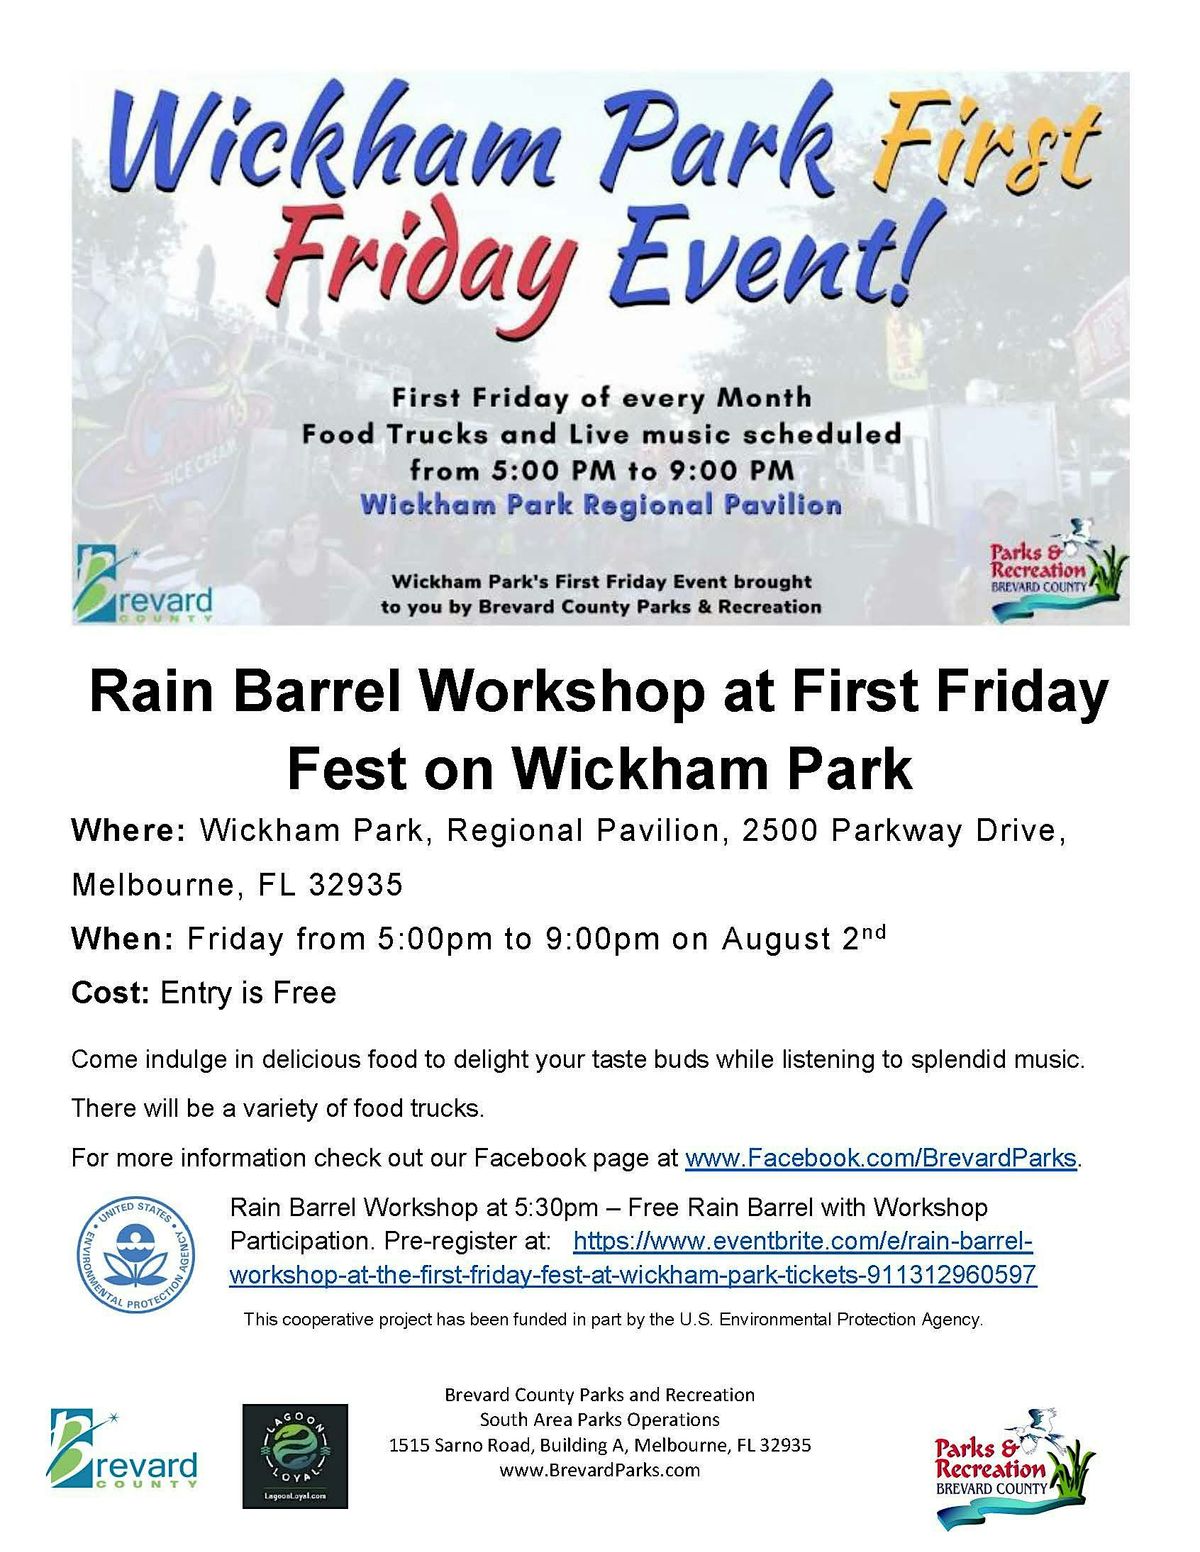 Rain Barrel Workshop at the First Friday Fest at Wickham Park